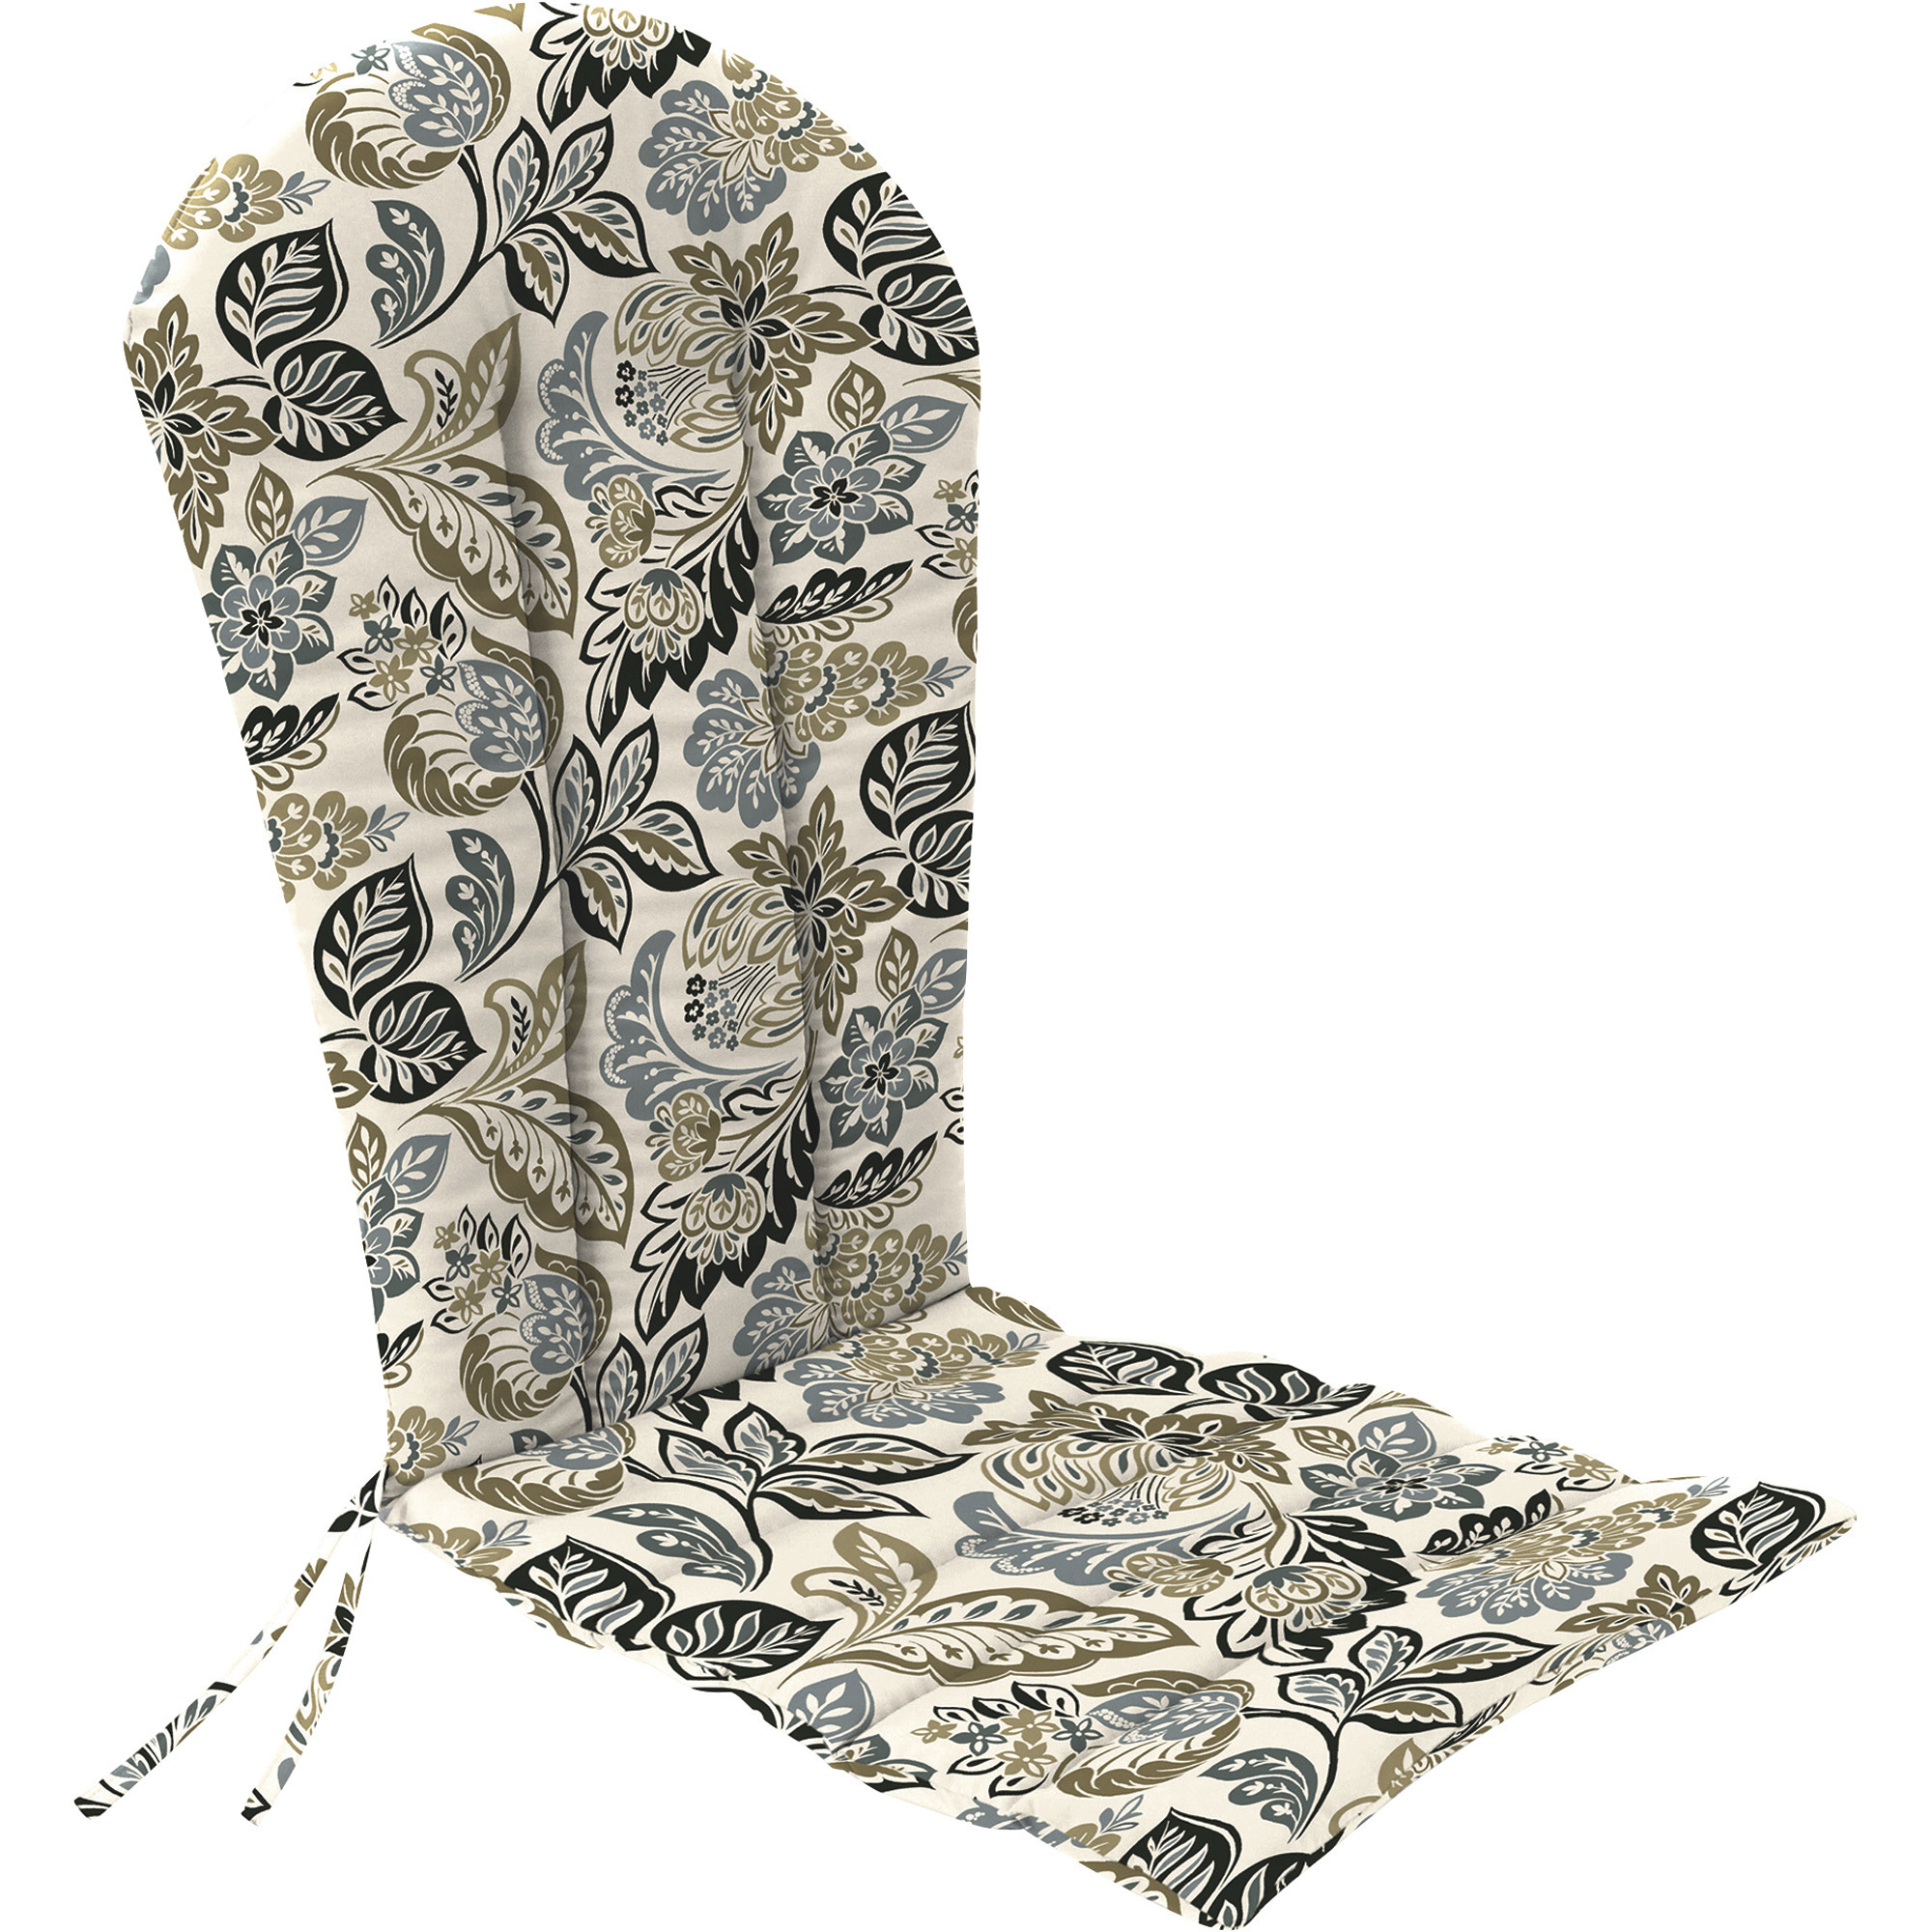 Jordan Manufacturing Adirondack Chair Cushion — Spun Polyester, Mini Dots  Rojo, Model# 9708PK1-4698D